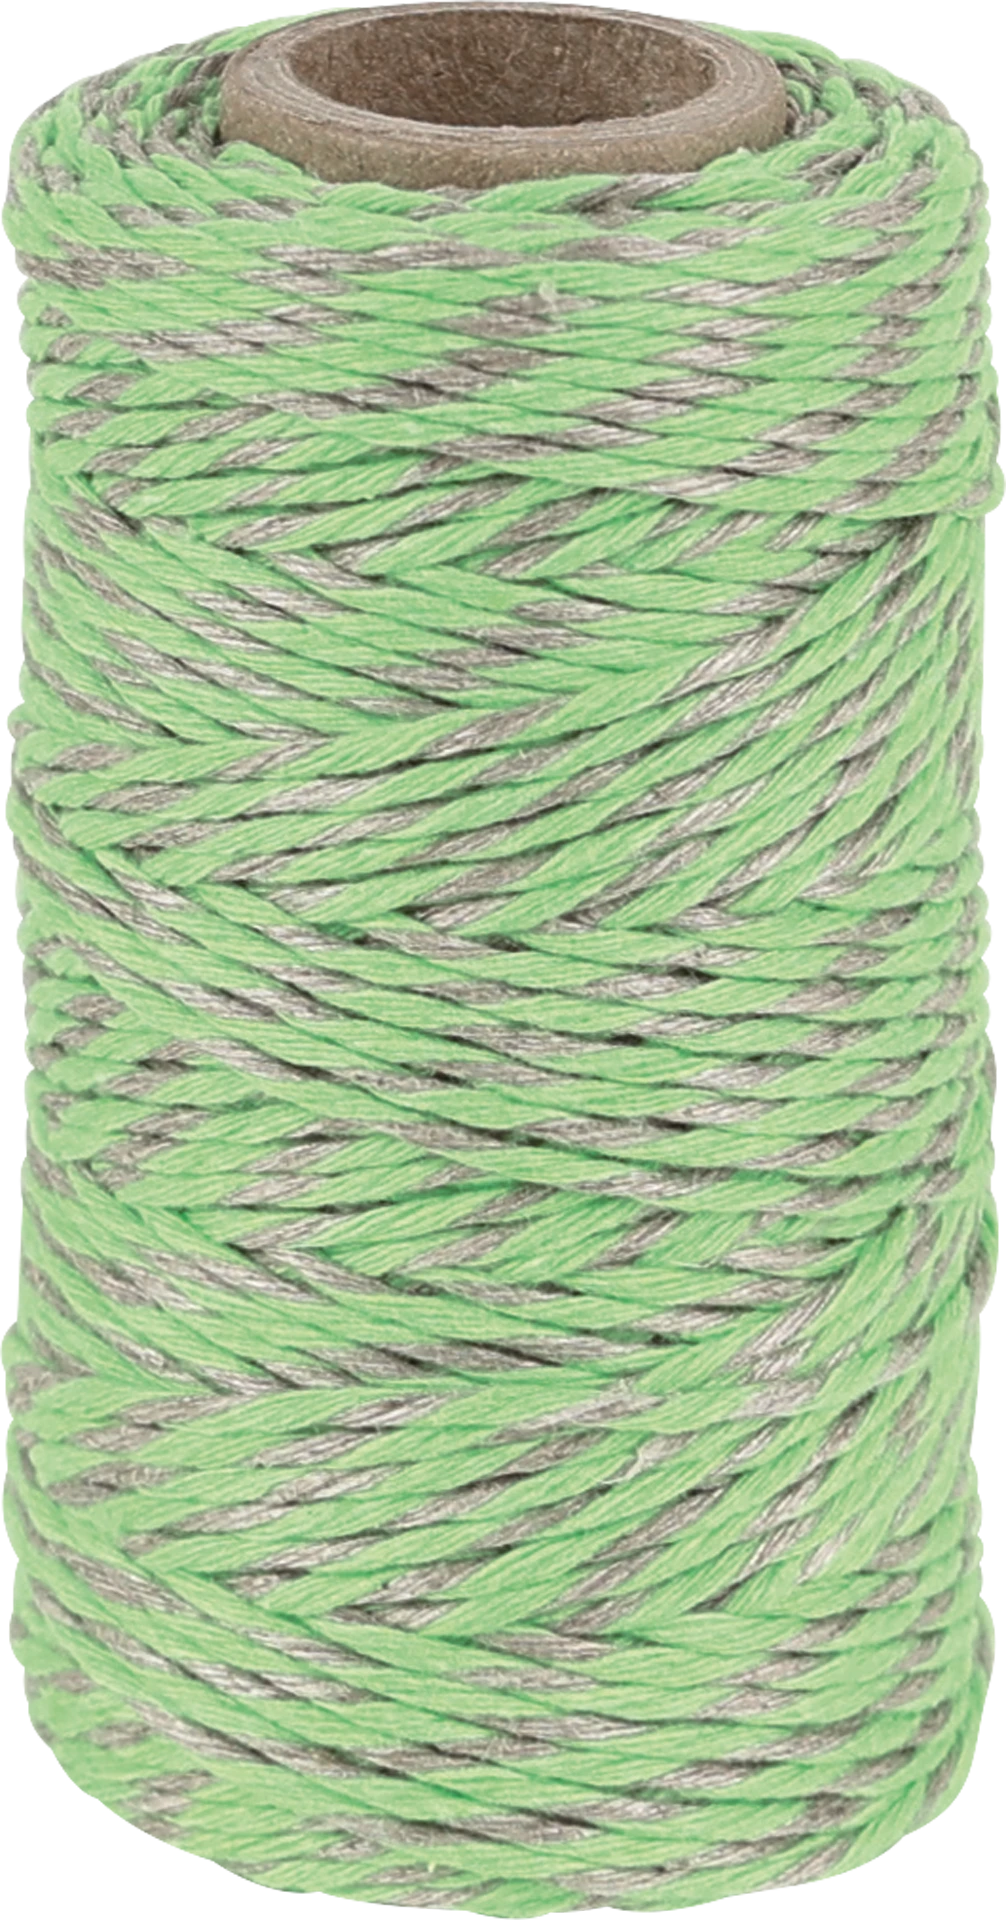 flax yarn